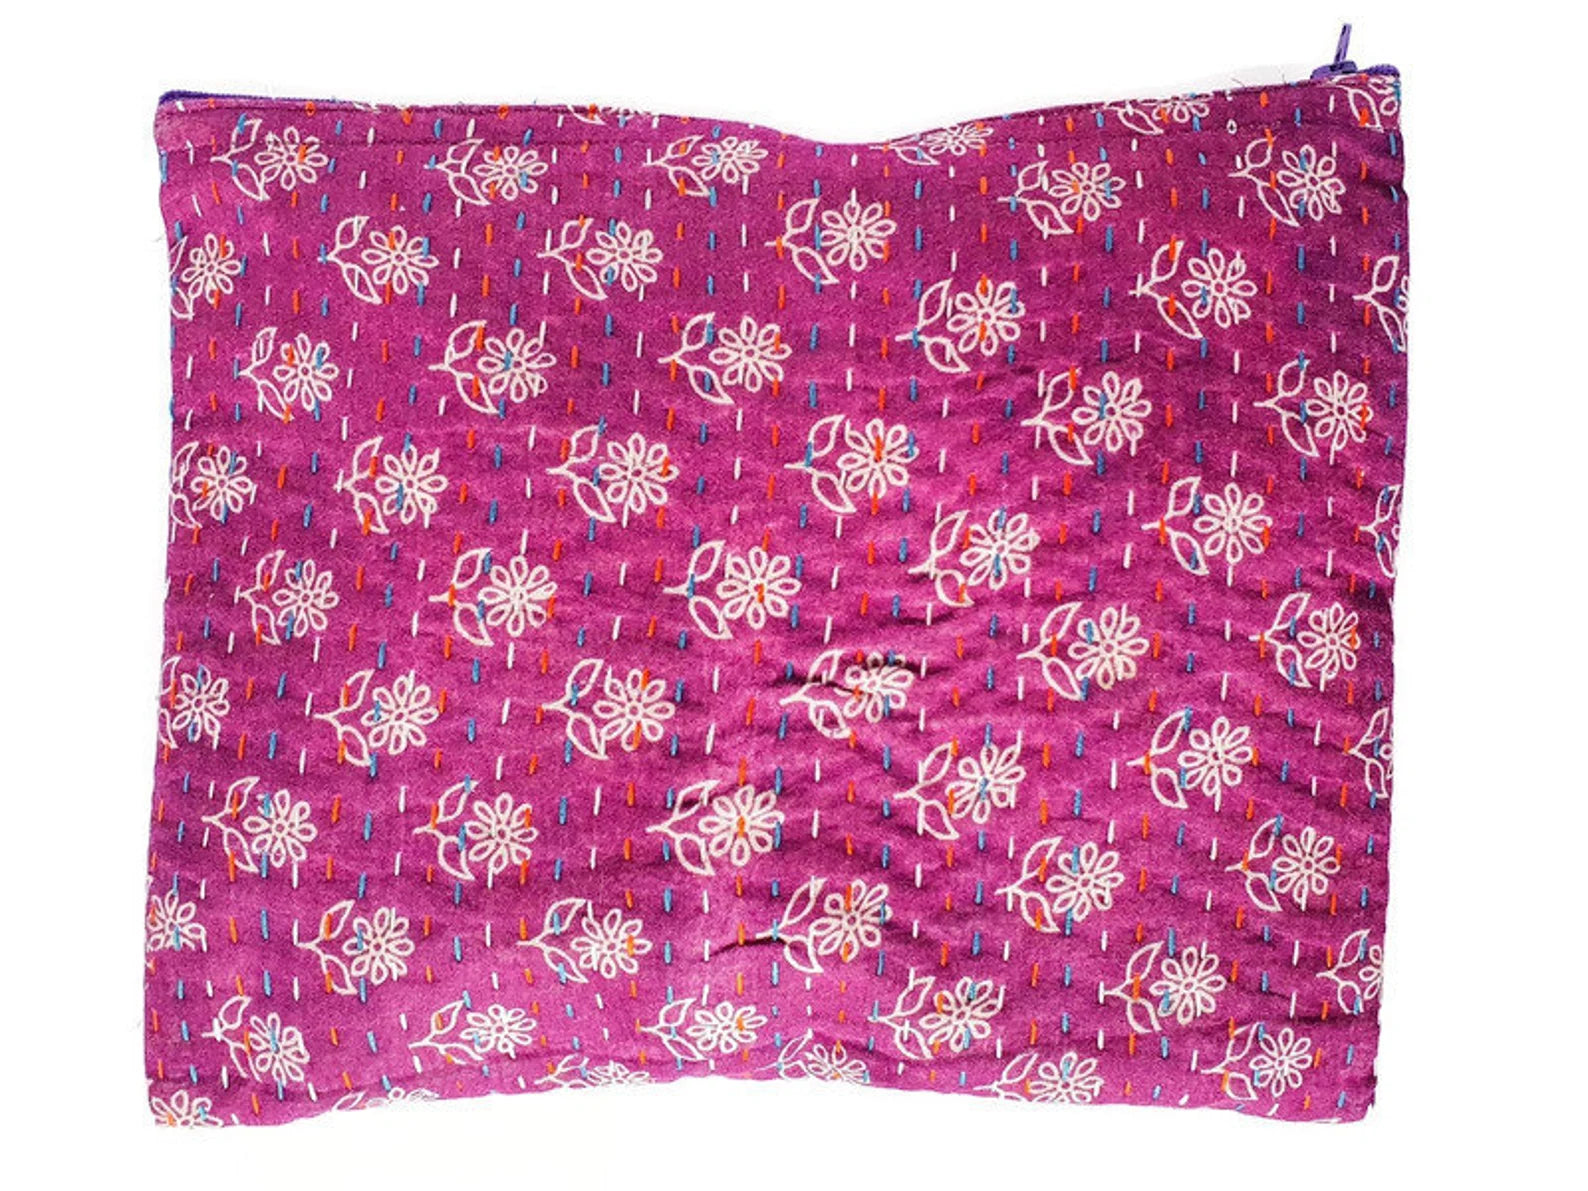 Upcycled sari clutch with kantha stitch